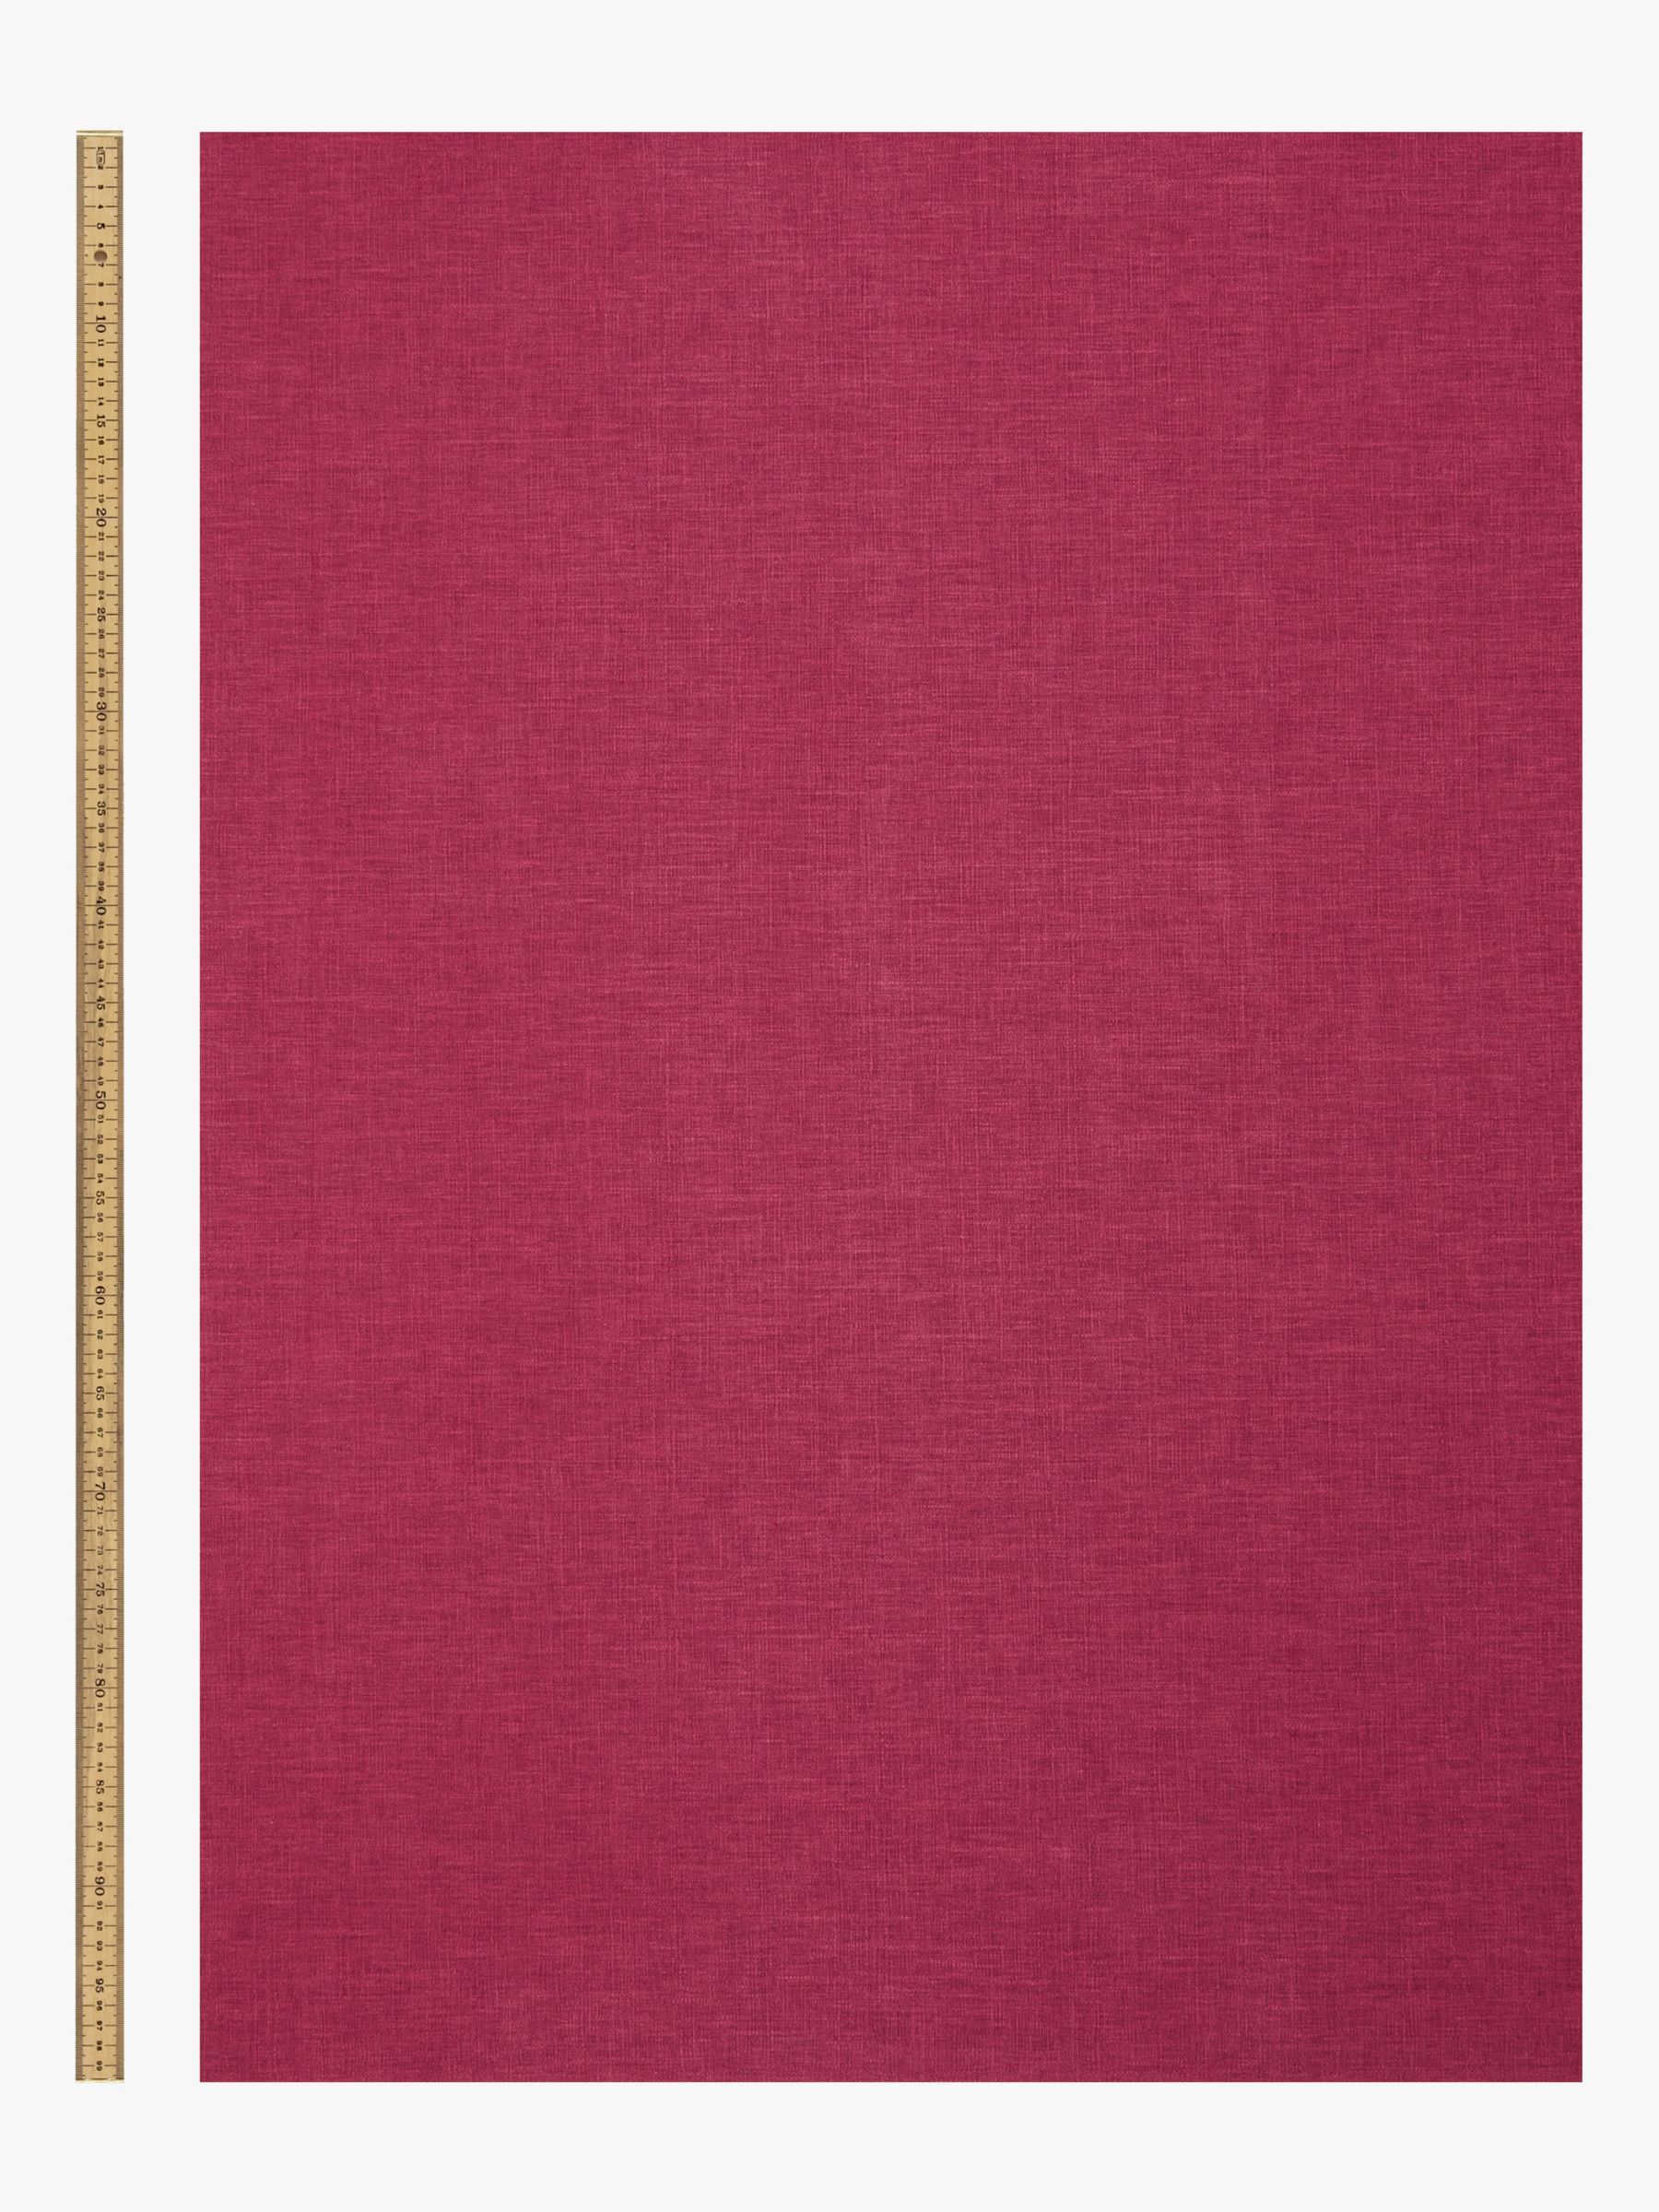 John Lewis Cotton Blend Furnishing Fabric, Raspberry